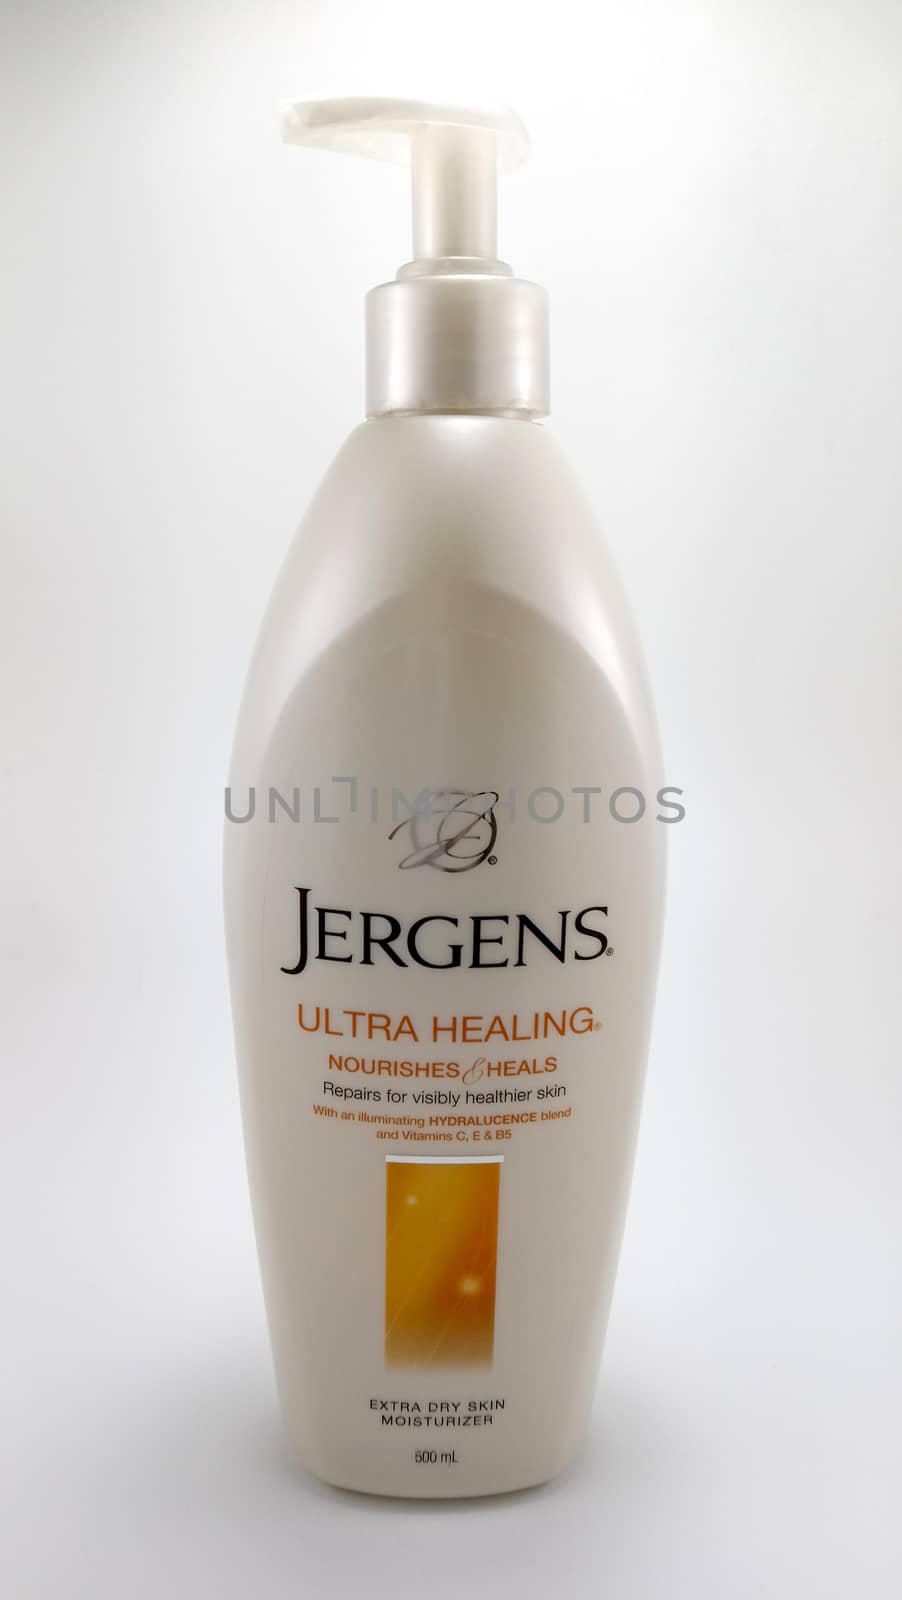 MANILA, PH - JUNE 23 - Jergens ultra healing extra dry skin moisturizer on June 23, 2020 in Manila, Philippines.